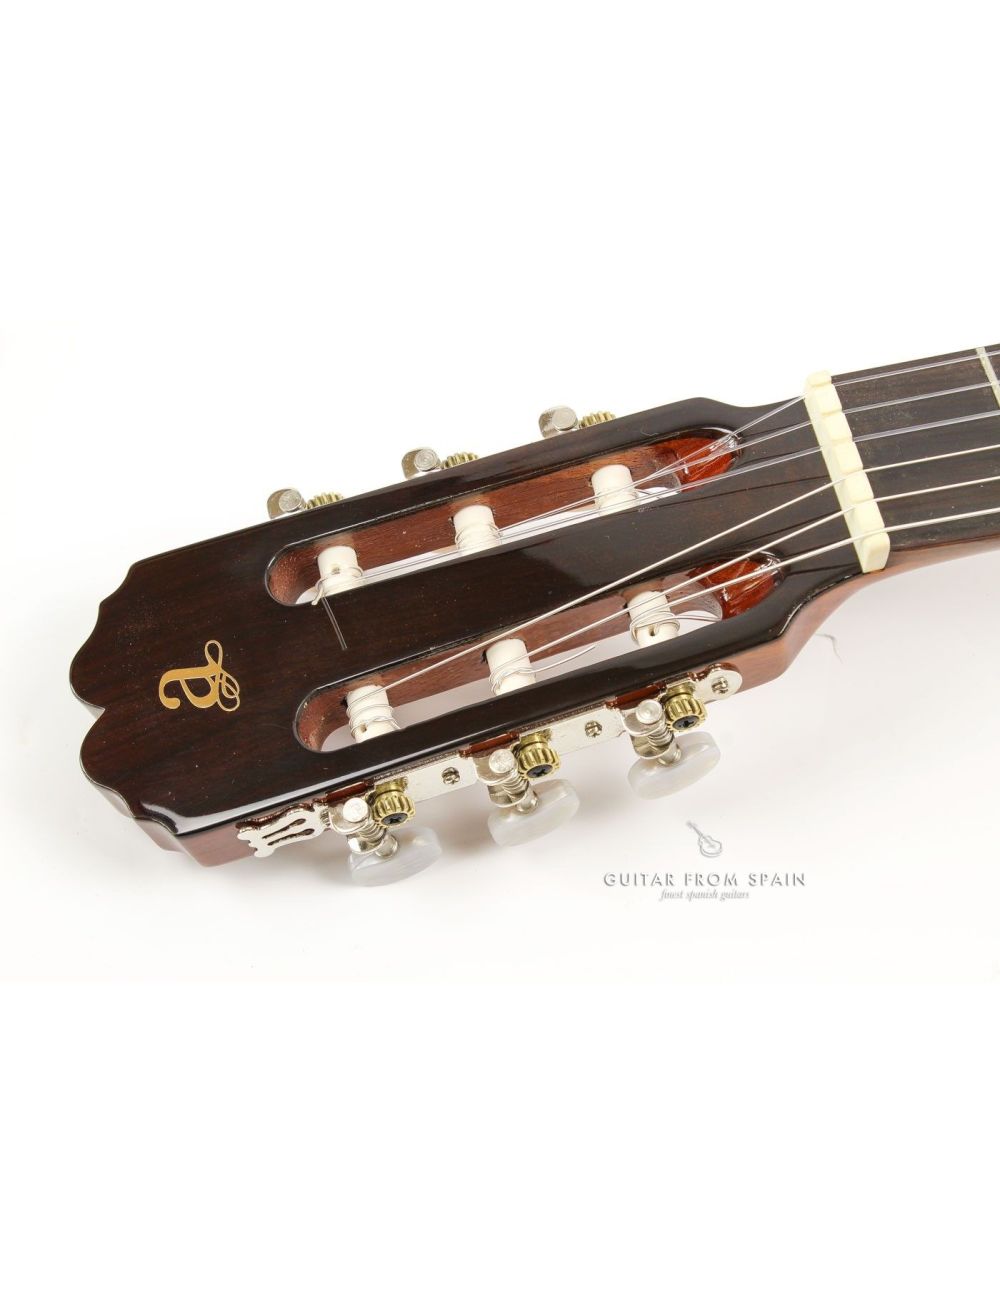 Admira MALAGA ECT CONSERVATORIO Electro-Classical guitar ADM0540ECT Thin body